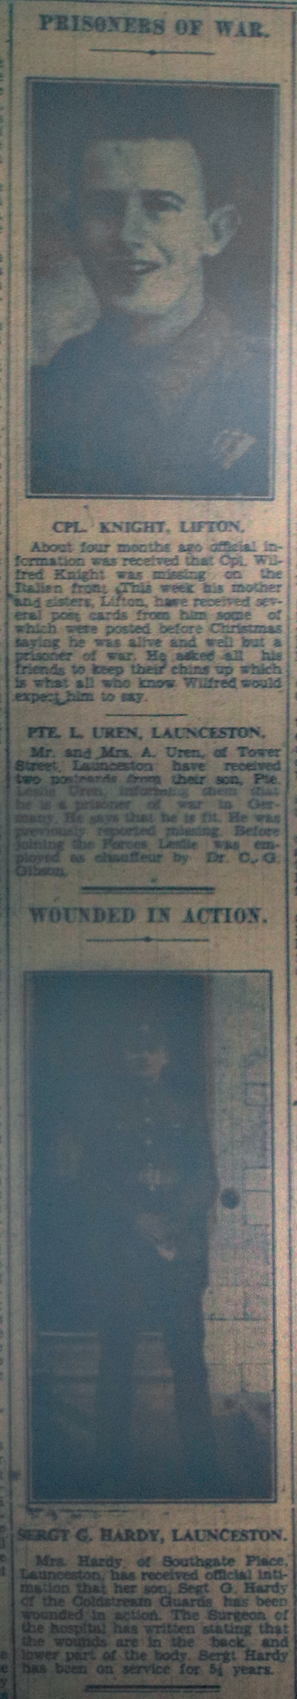 Launceston POW's March 10th, 1944.